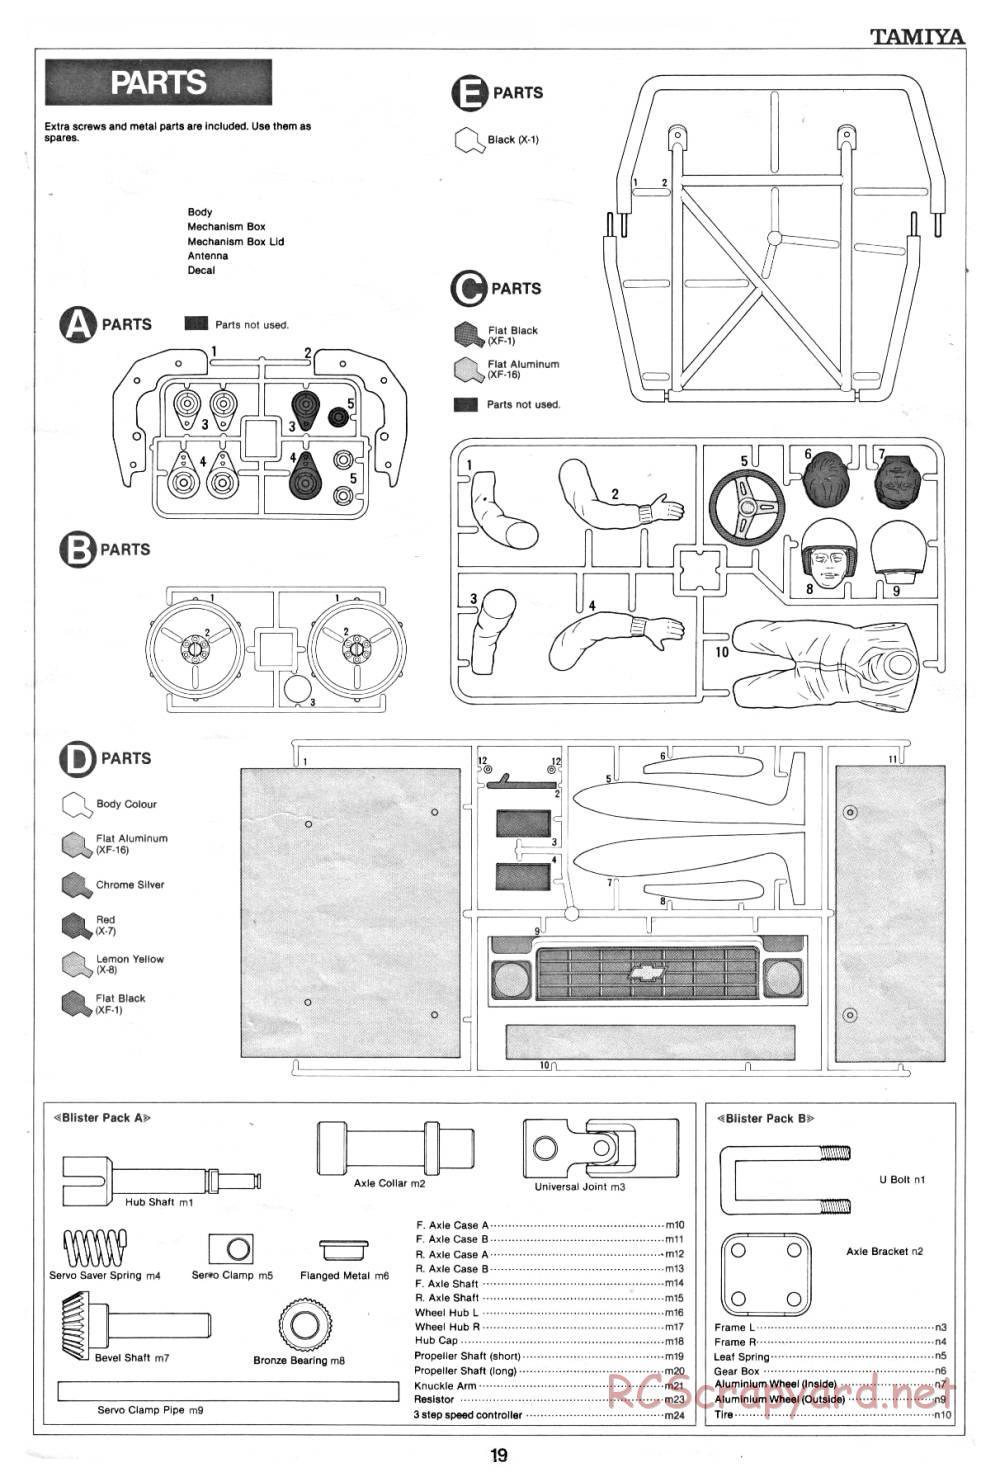 Tamiya - Blazing Blazer - 58029 - Manual - Page 19